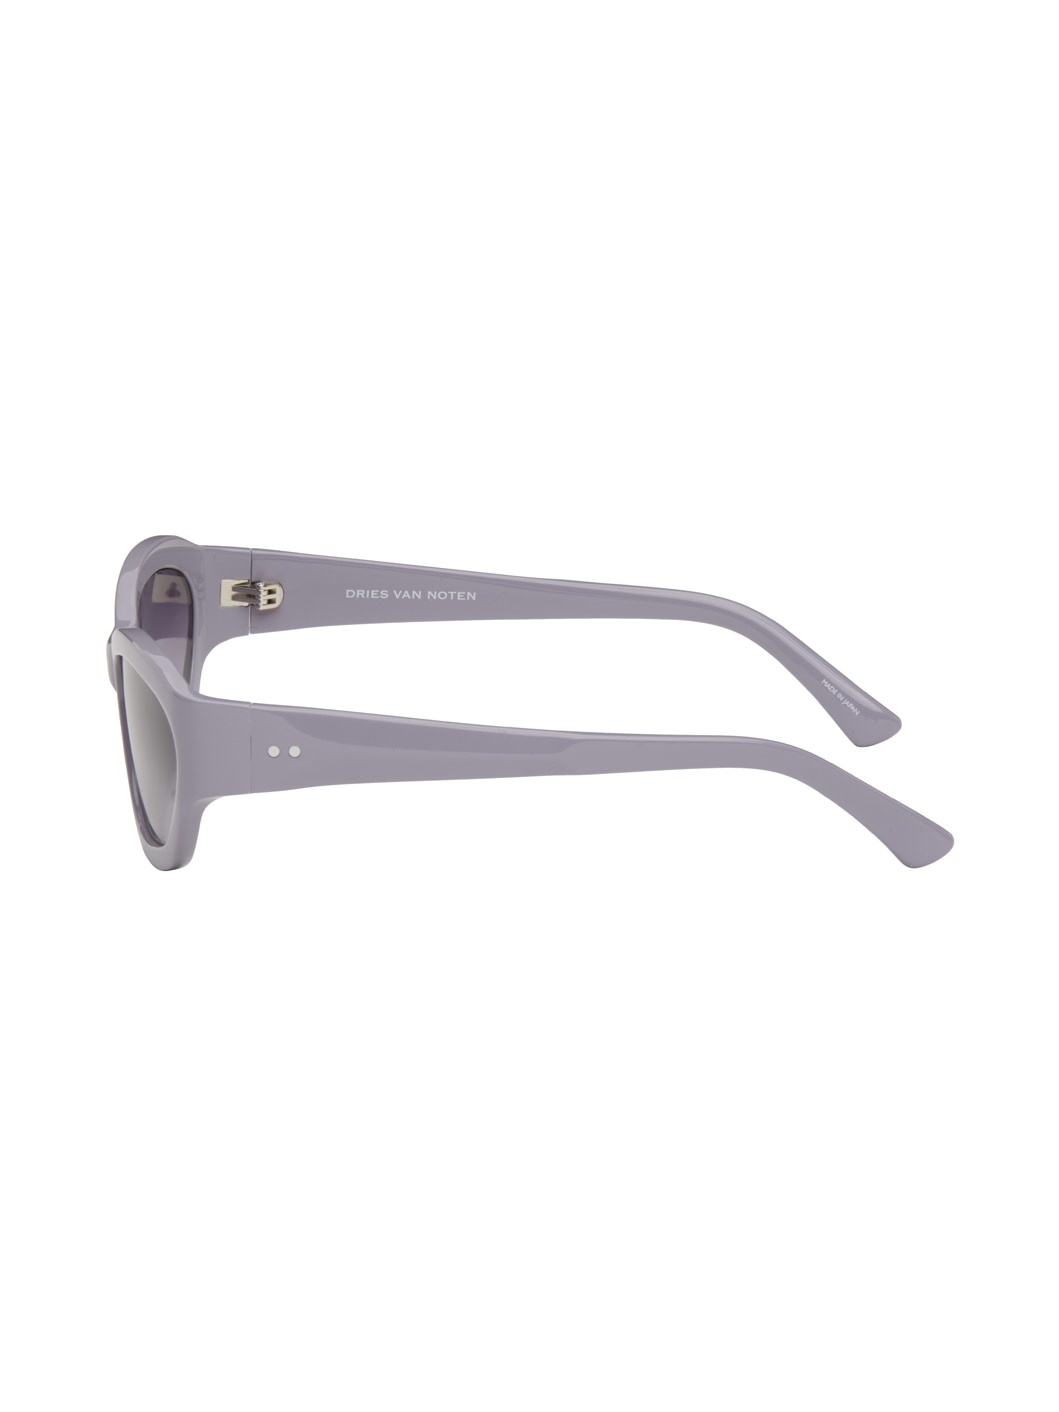 Purple Linda Farrow Edition Goggle Sunglasses - 3